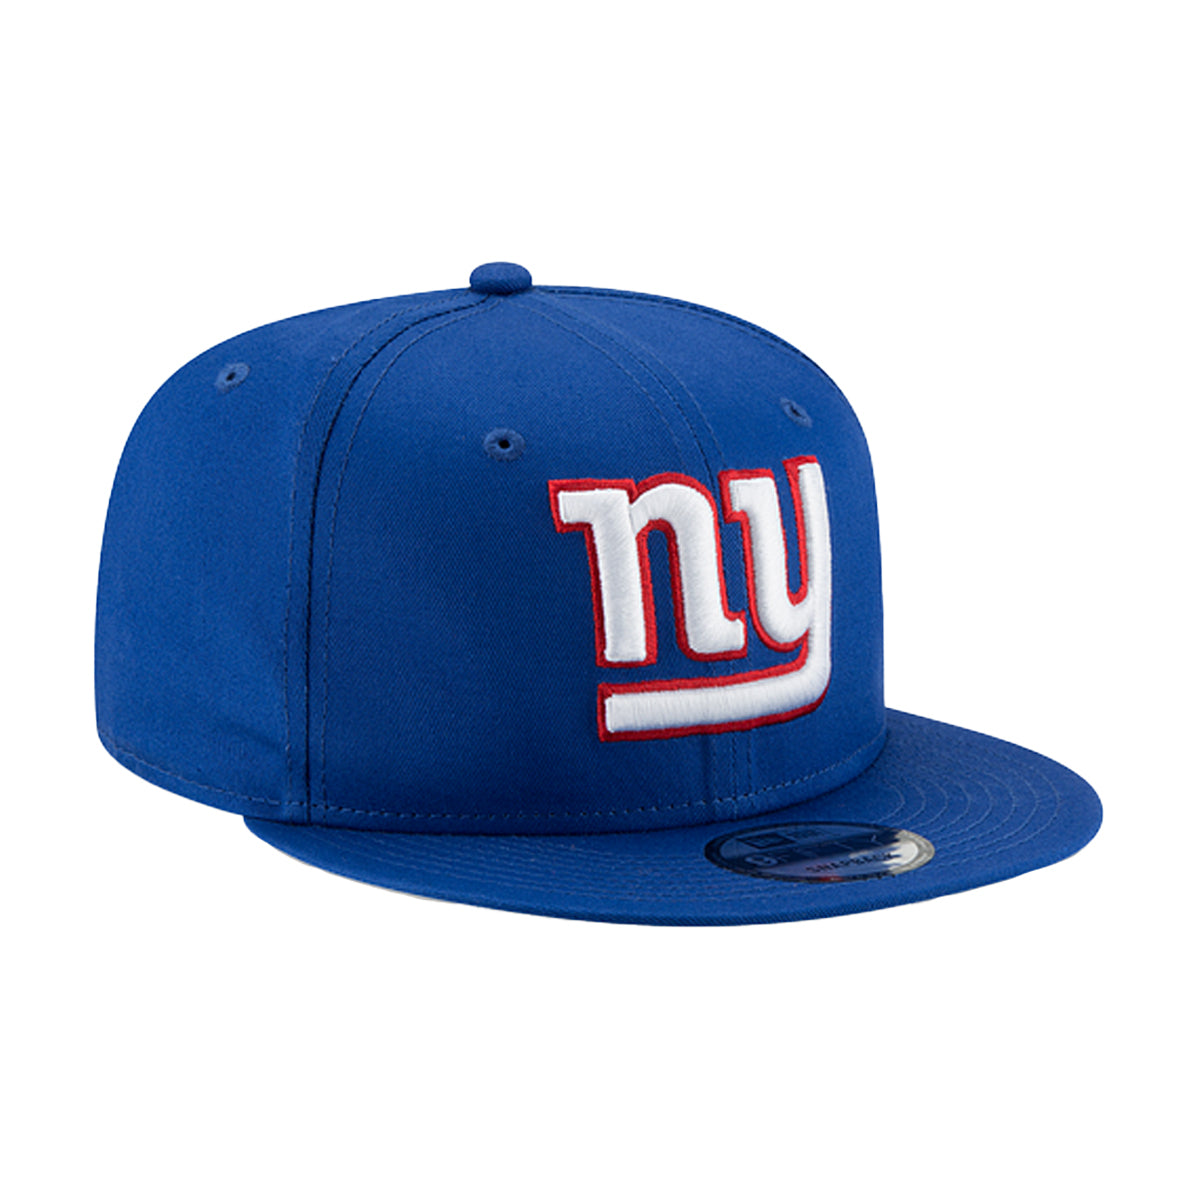 New Era 9FIFTY NFL New York Giants Basic Snapback Hat